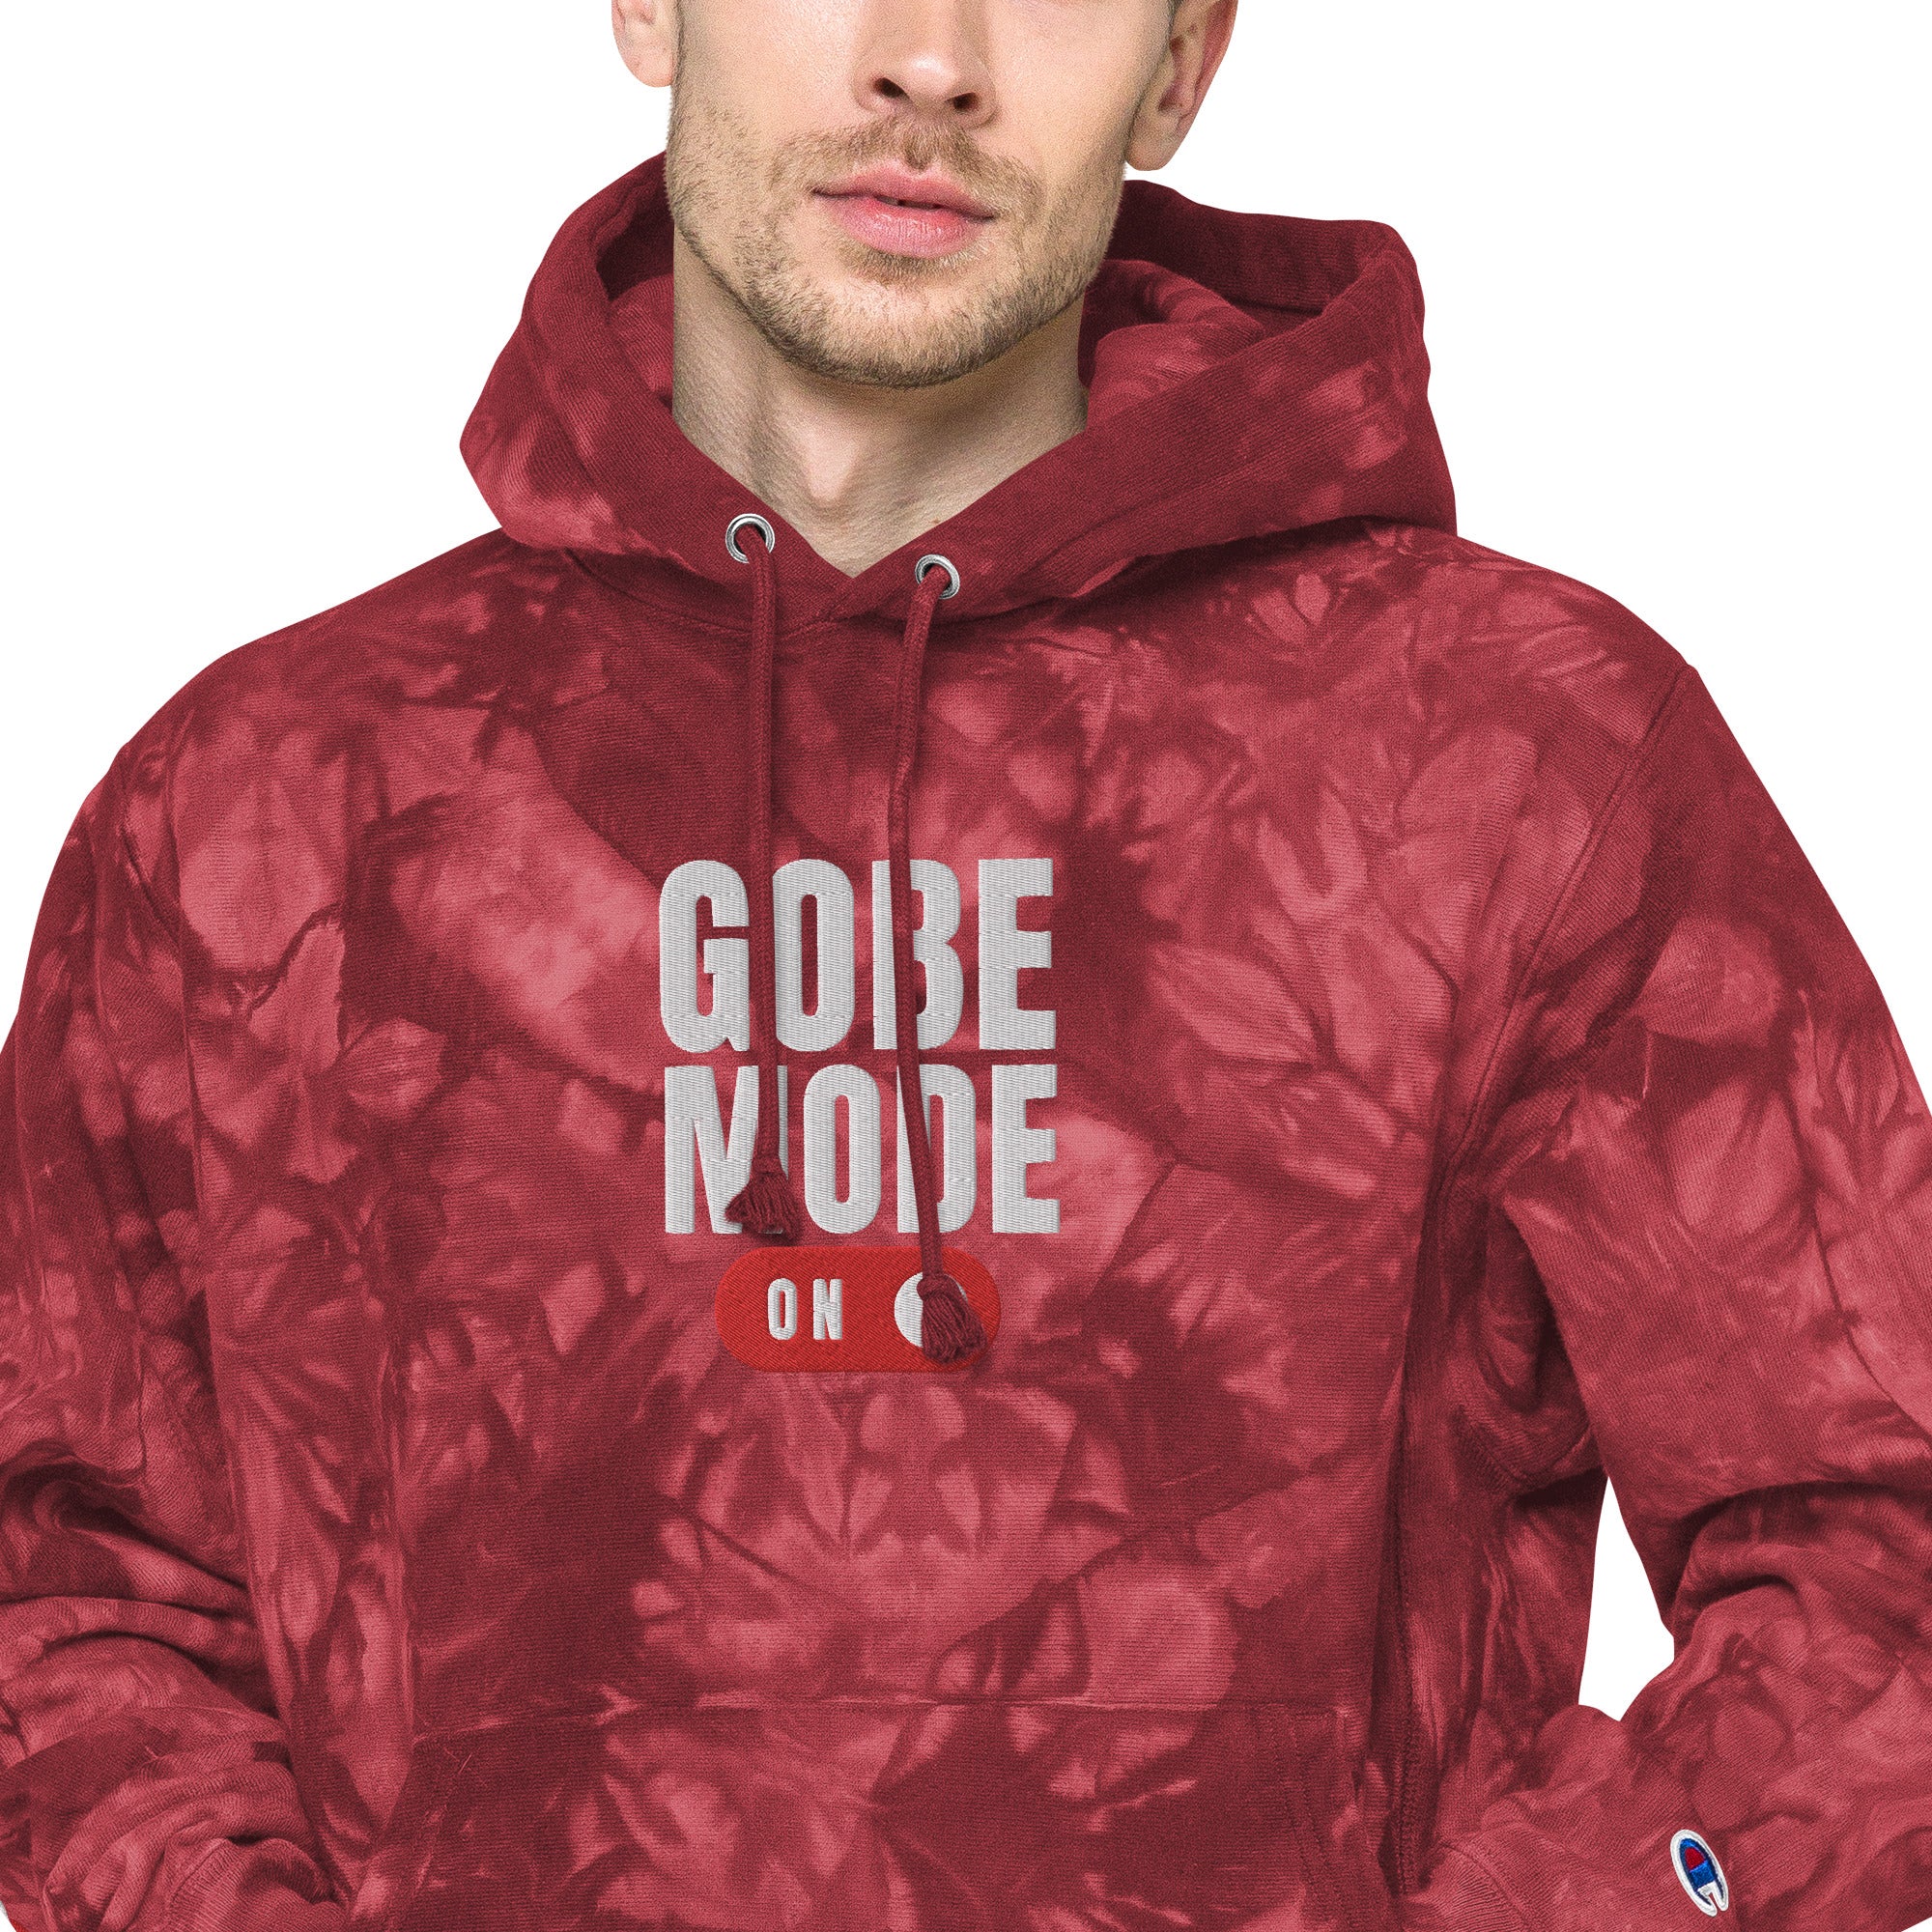 GOBE MODE ON Unisex Champion tie-dye hoodie